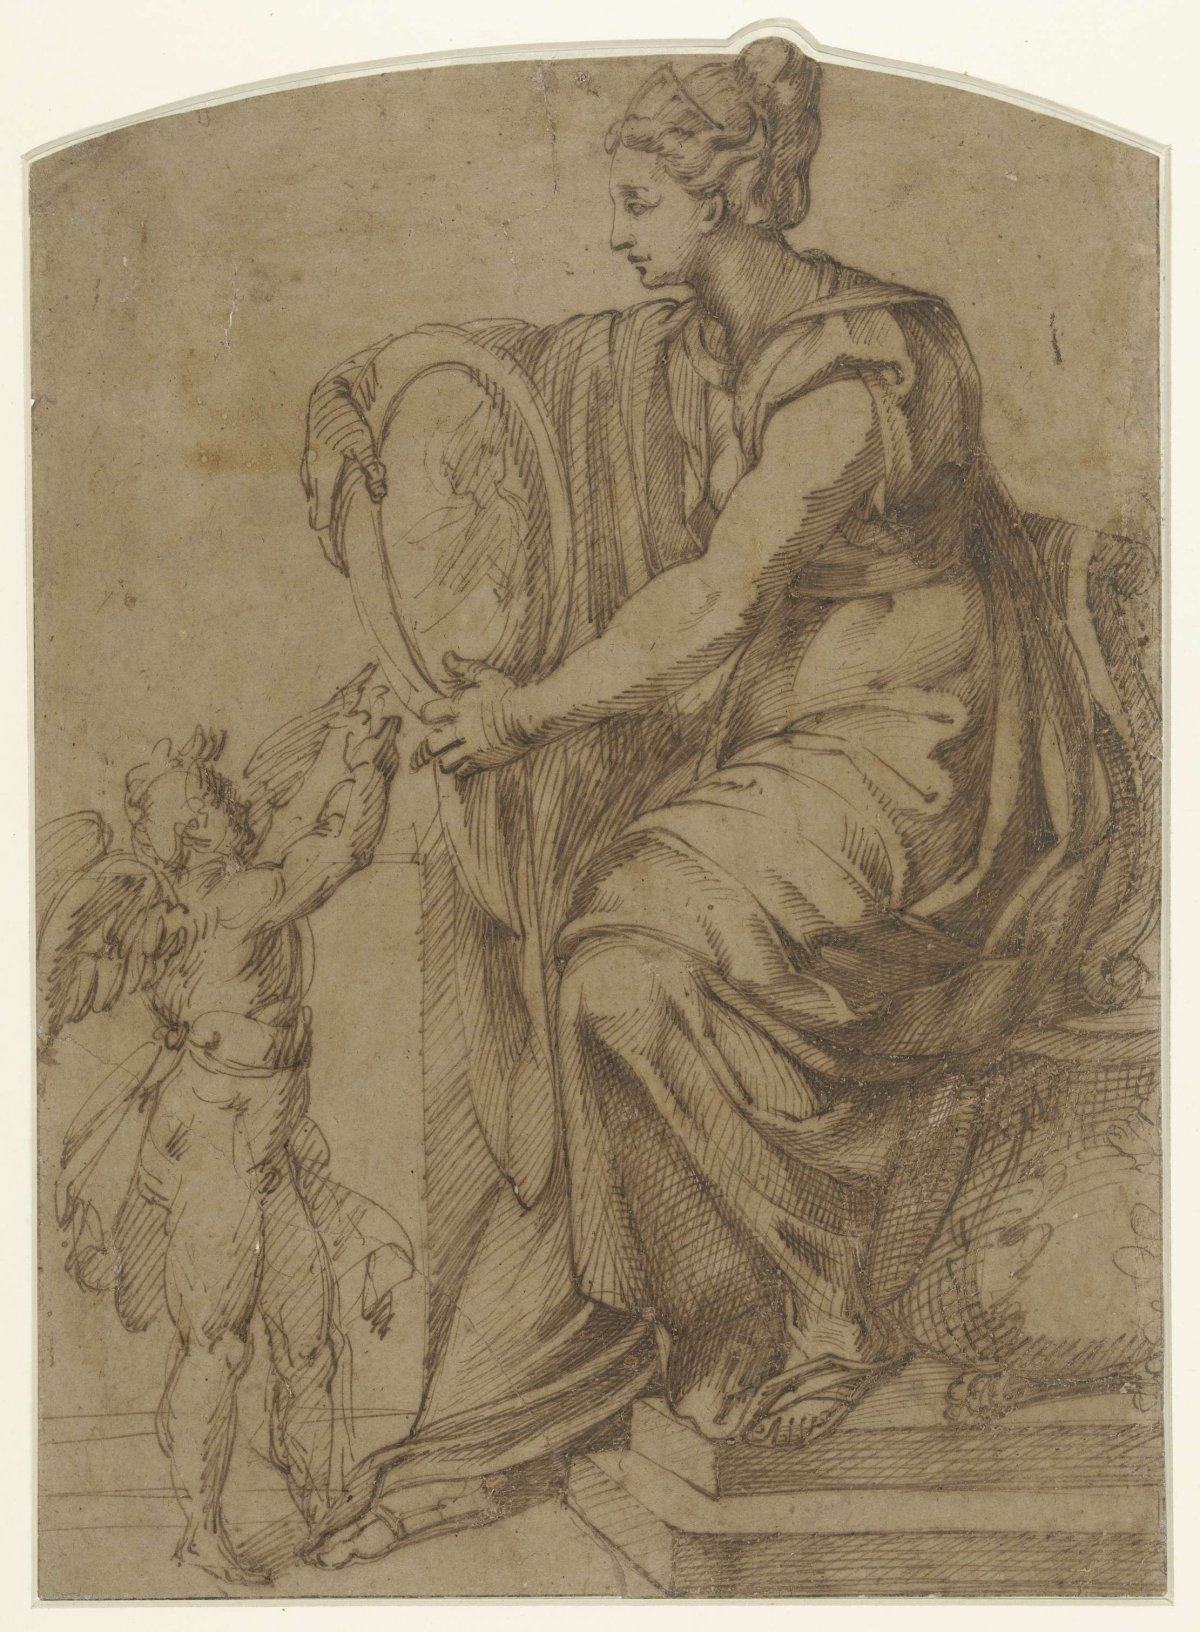 Woman with a mirror sitting on a throne (Prudentia?), Bartolomeo Passarotti, 1538 - 1592